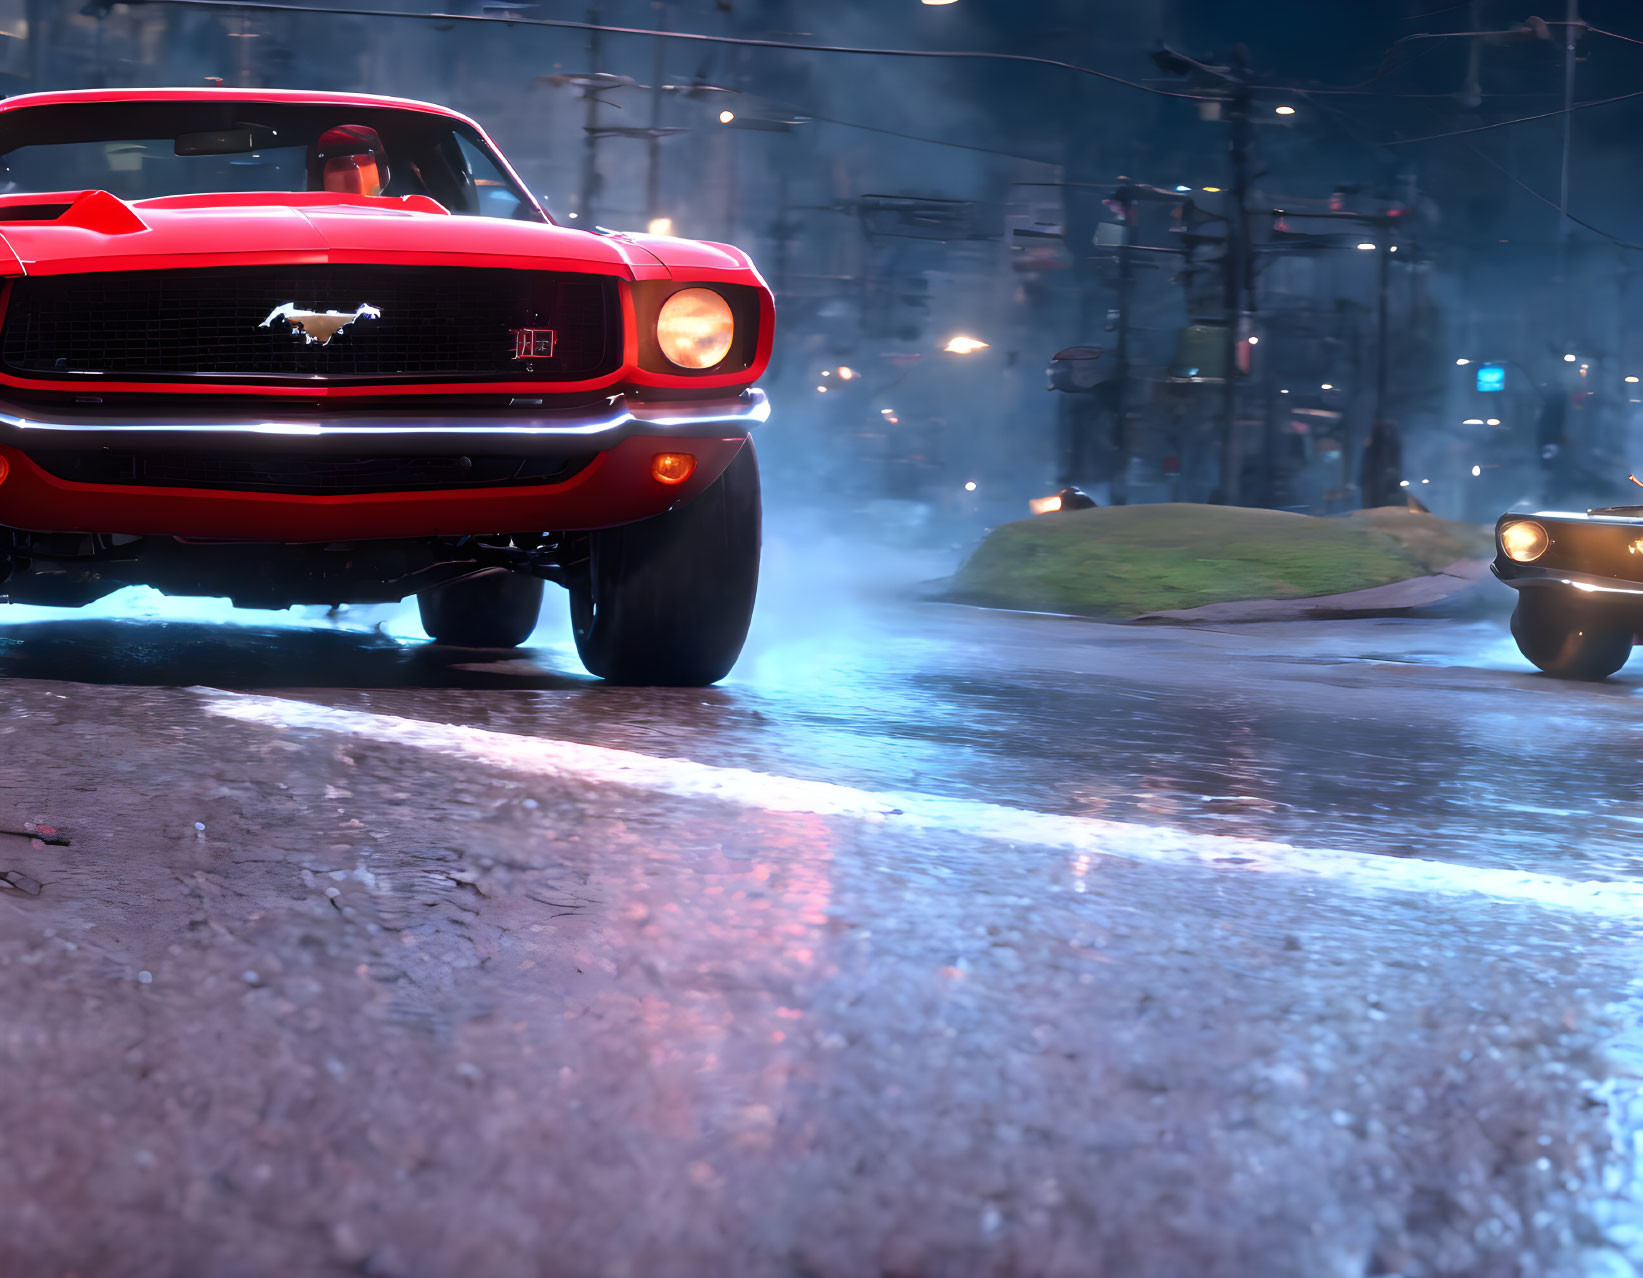 Vintage red Mustang and pursuing car speed through neon-lit urban street at night